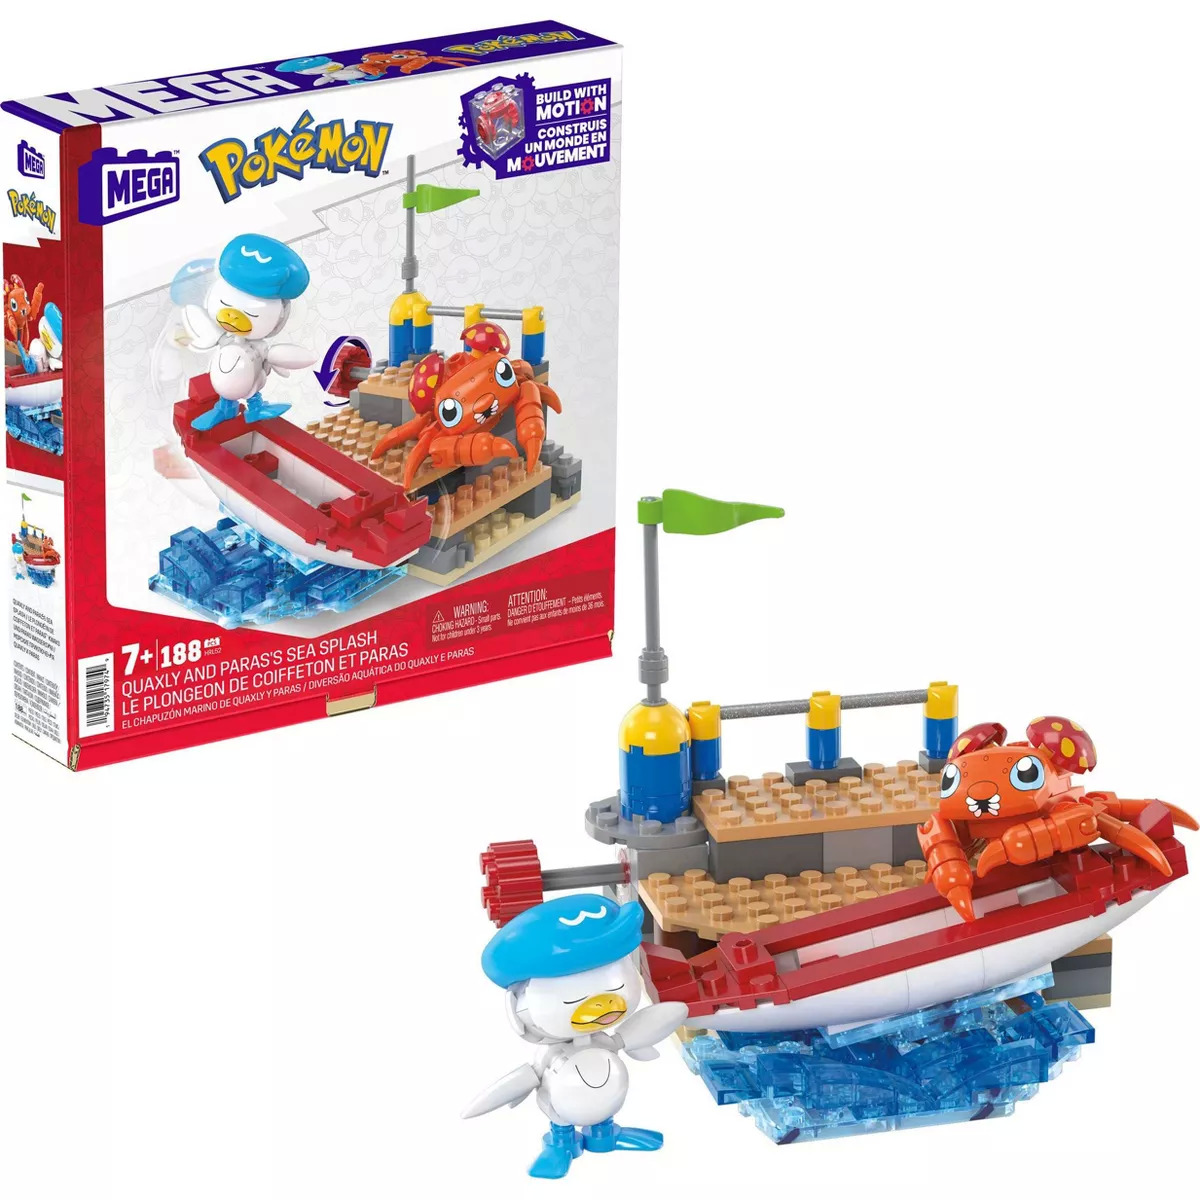 188-Piece Mega Pokémon Quaxly & Paras's Sea Splash Toy Building Set $10 + Free Store Pickup at Target or Free Shipping on $35+